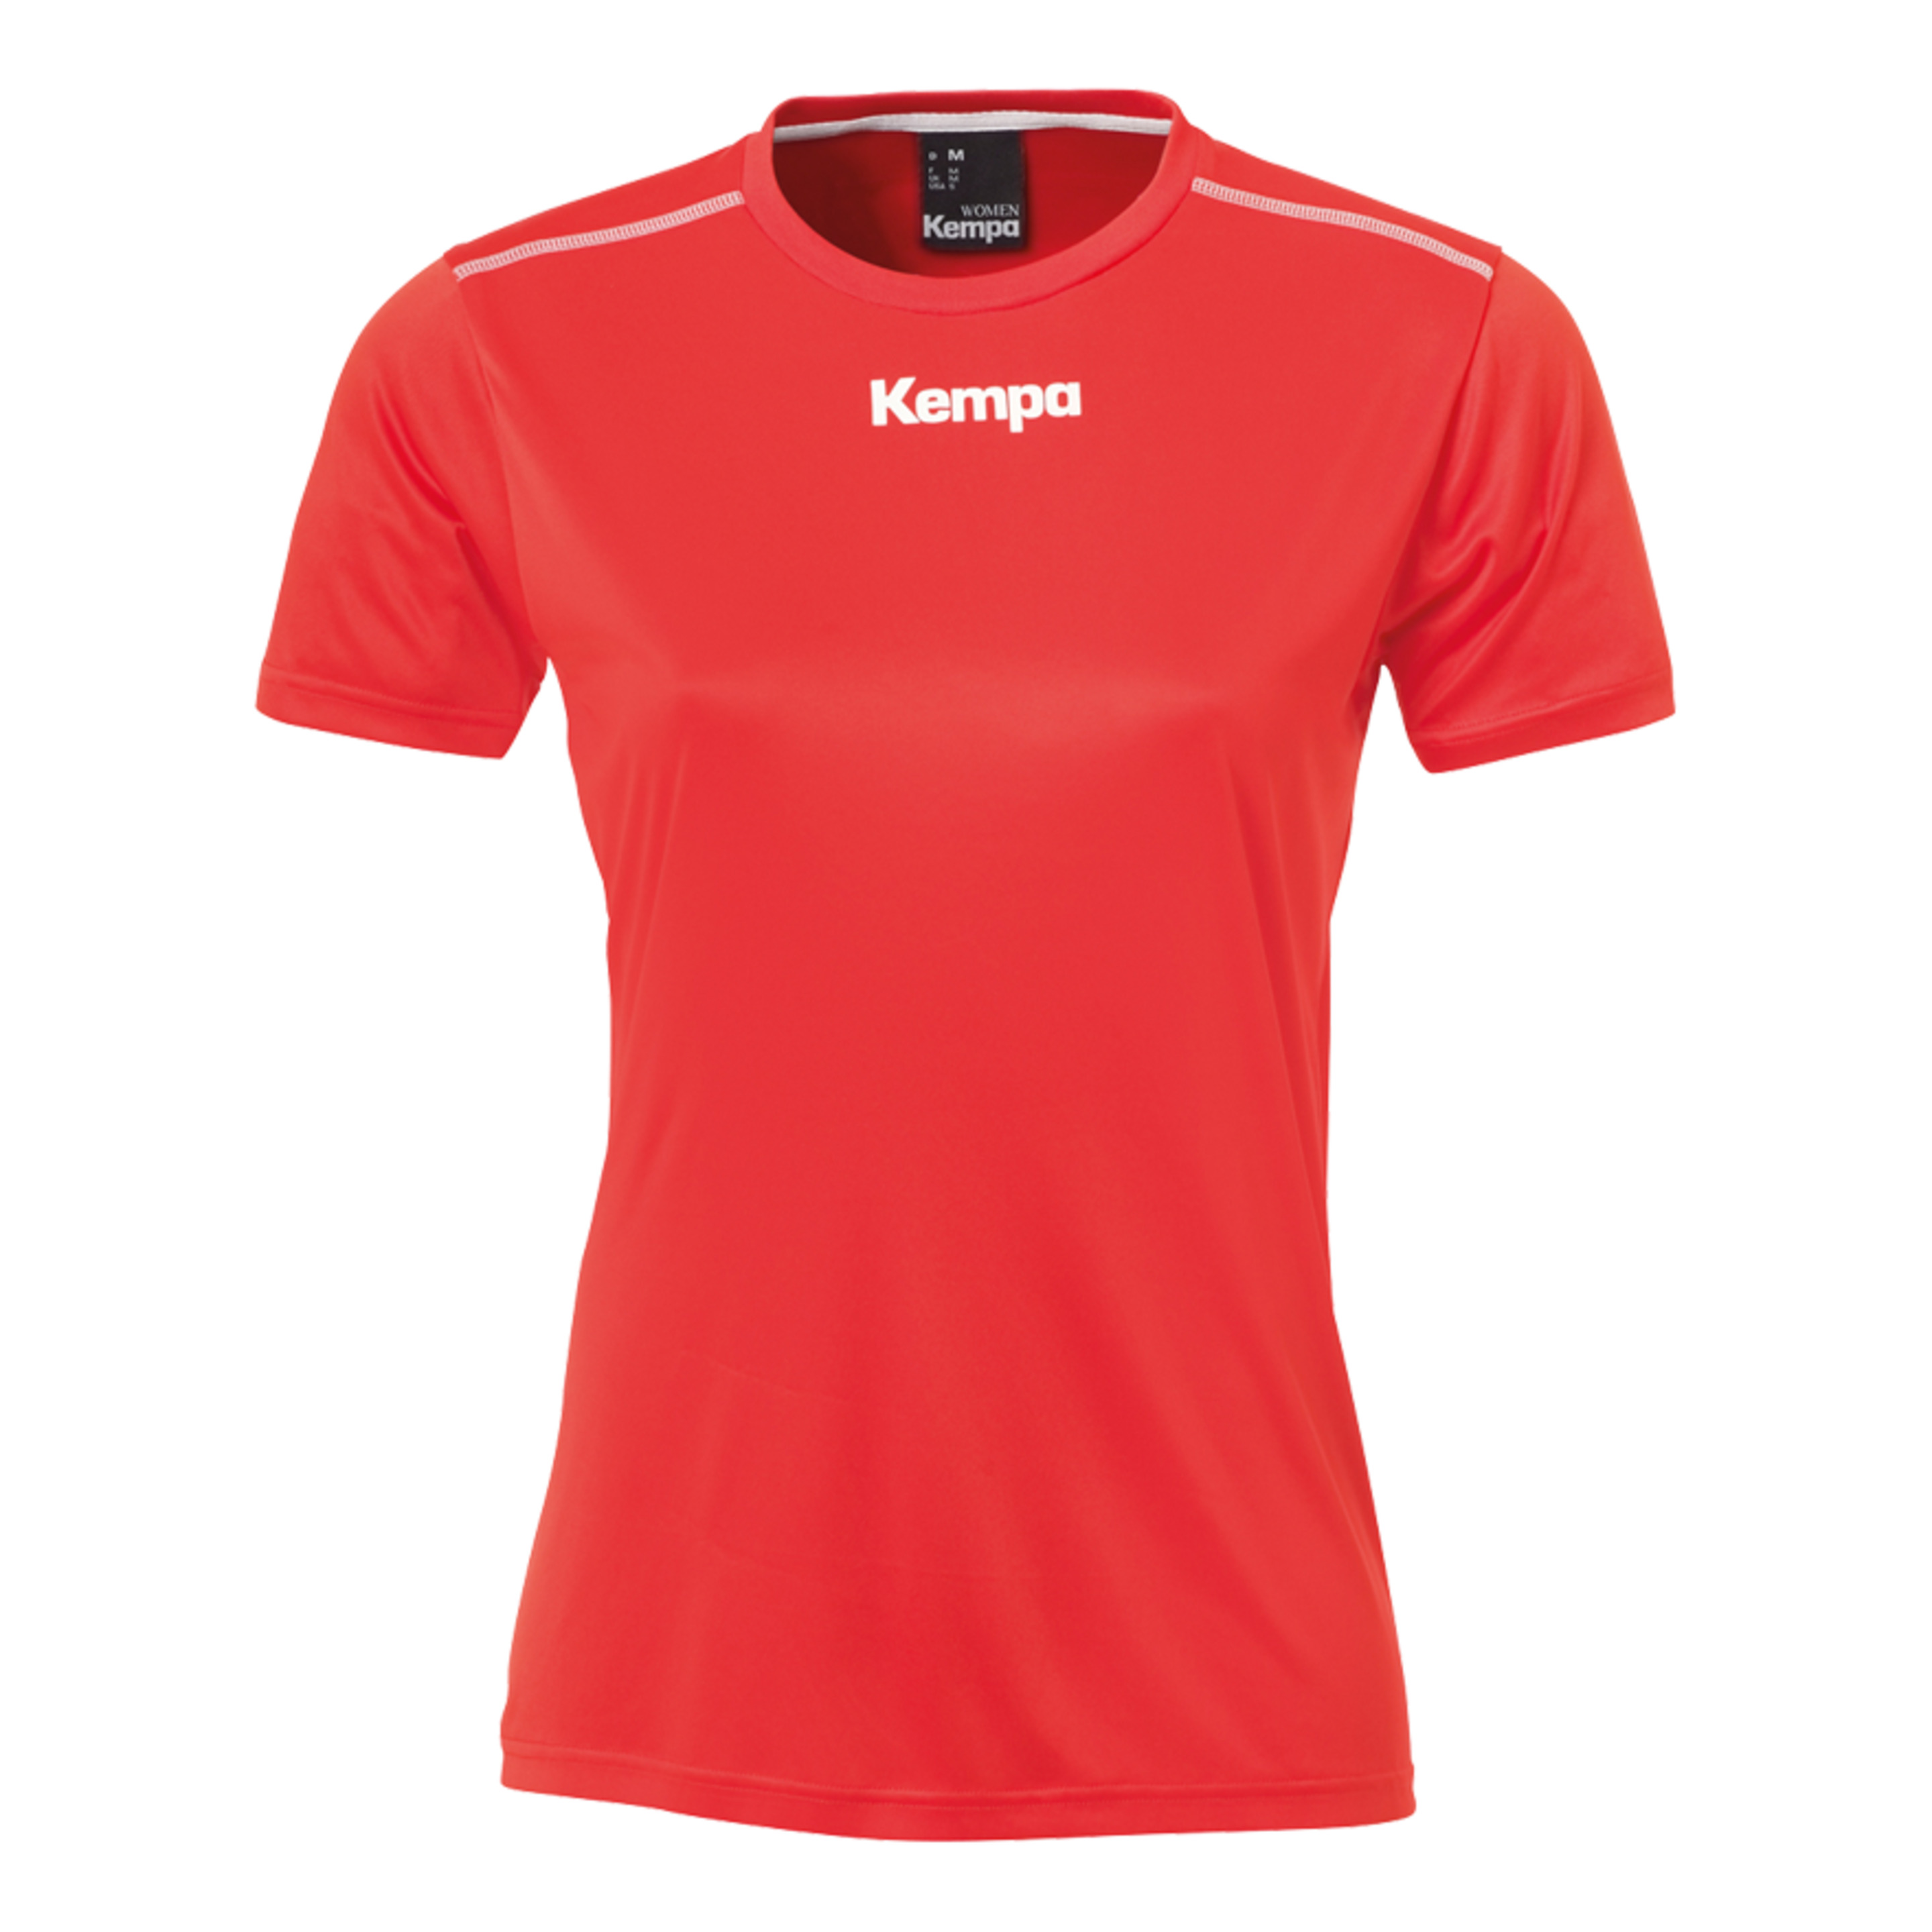 Poly Shirt De Mujer Rojo Kempa